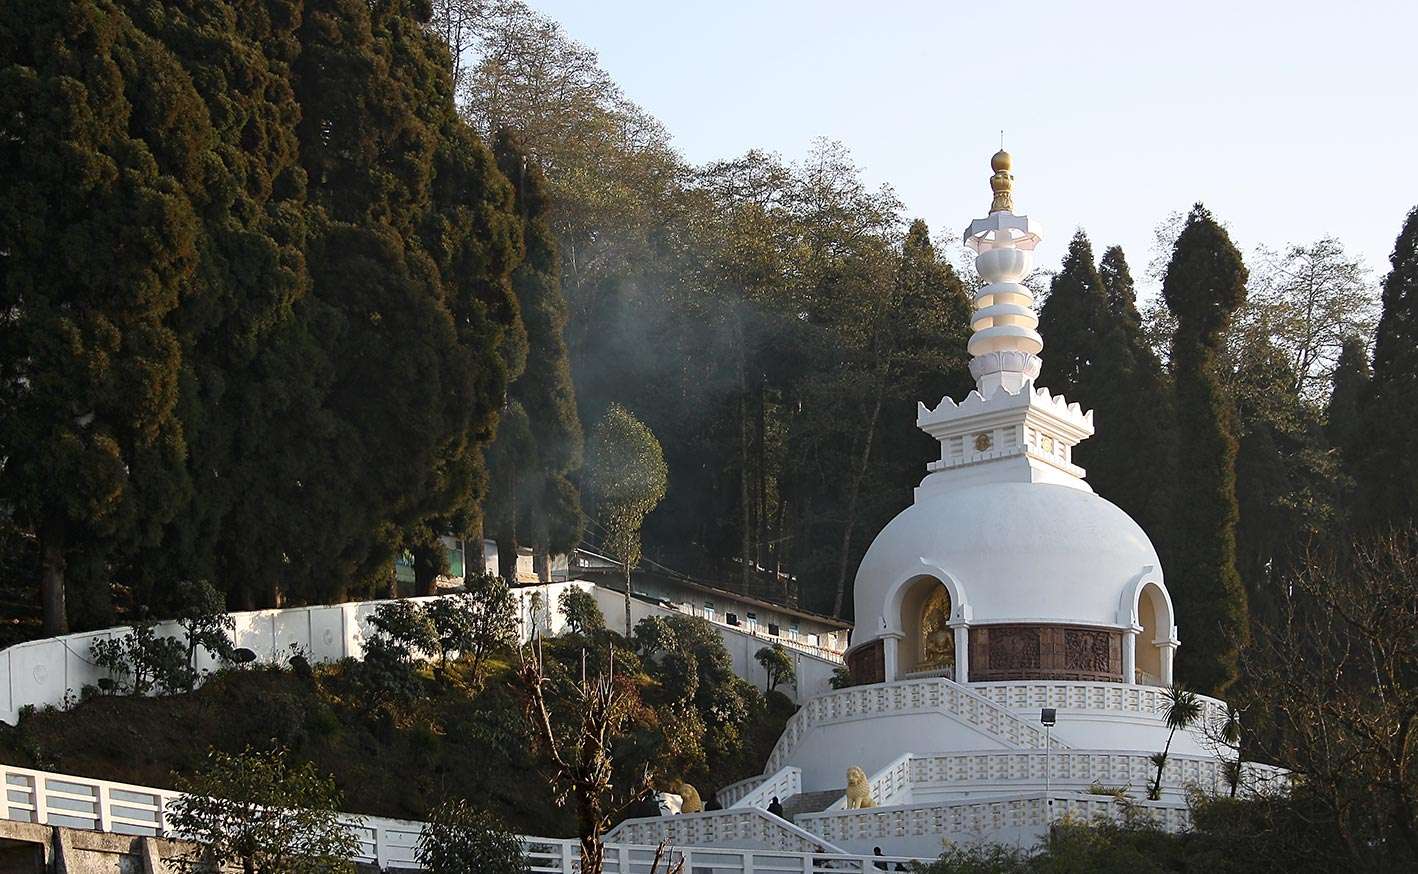 Adventurous Sikkim, Kalimpong & Darjeeling Tour Package 